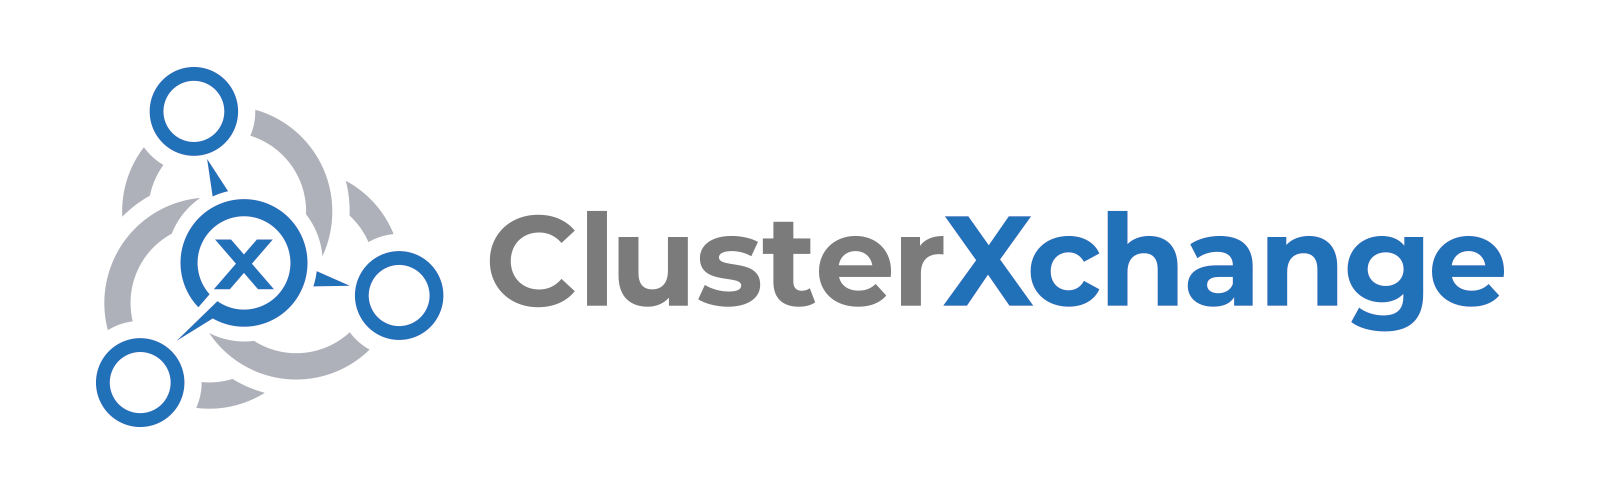 ClusterXchange-Logo